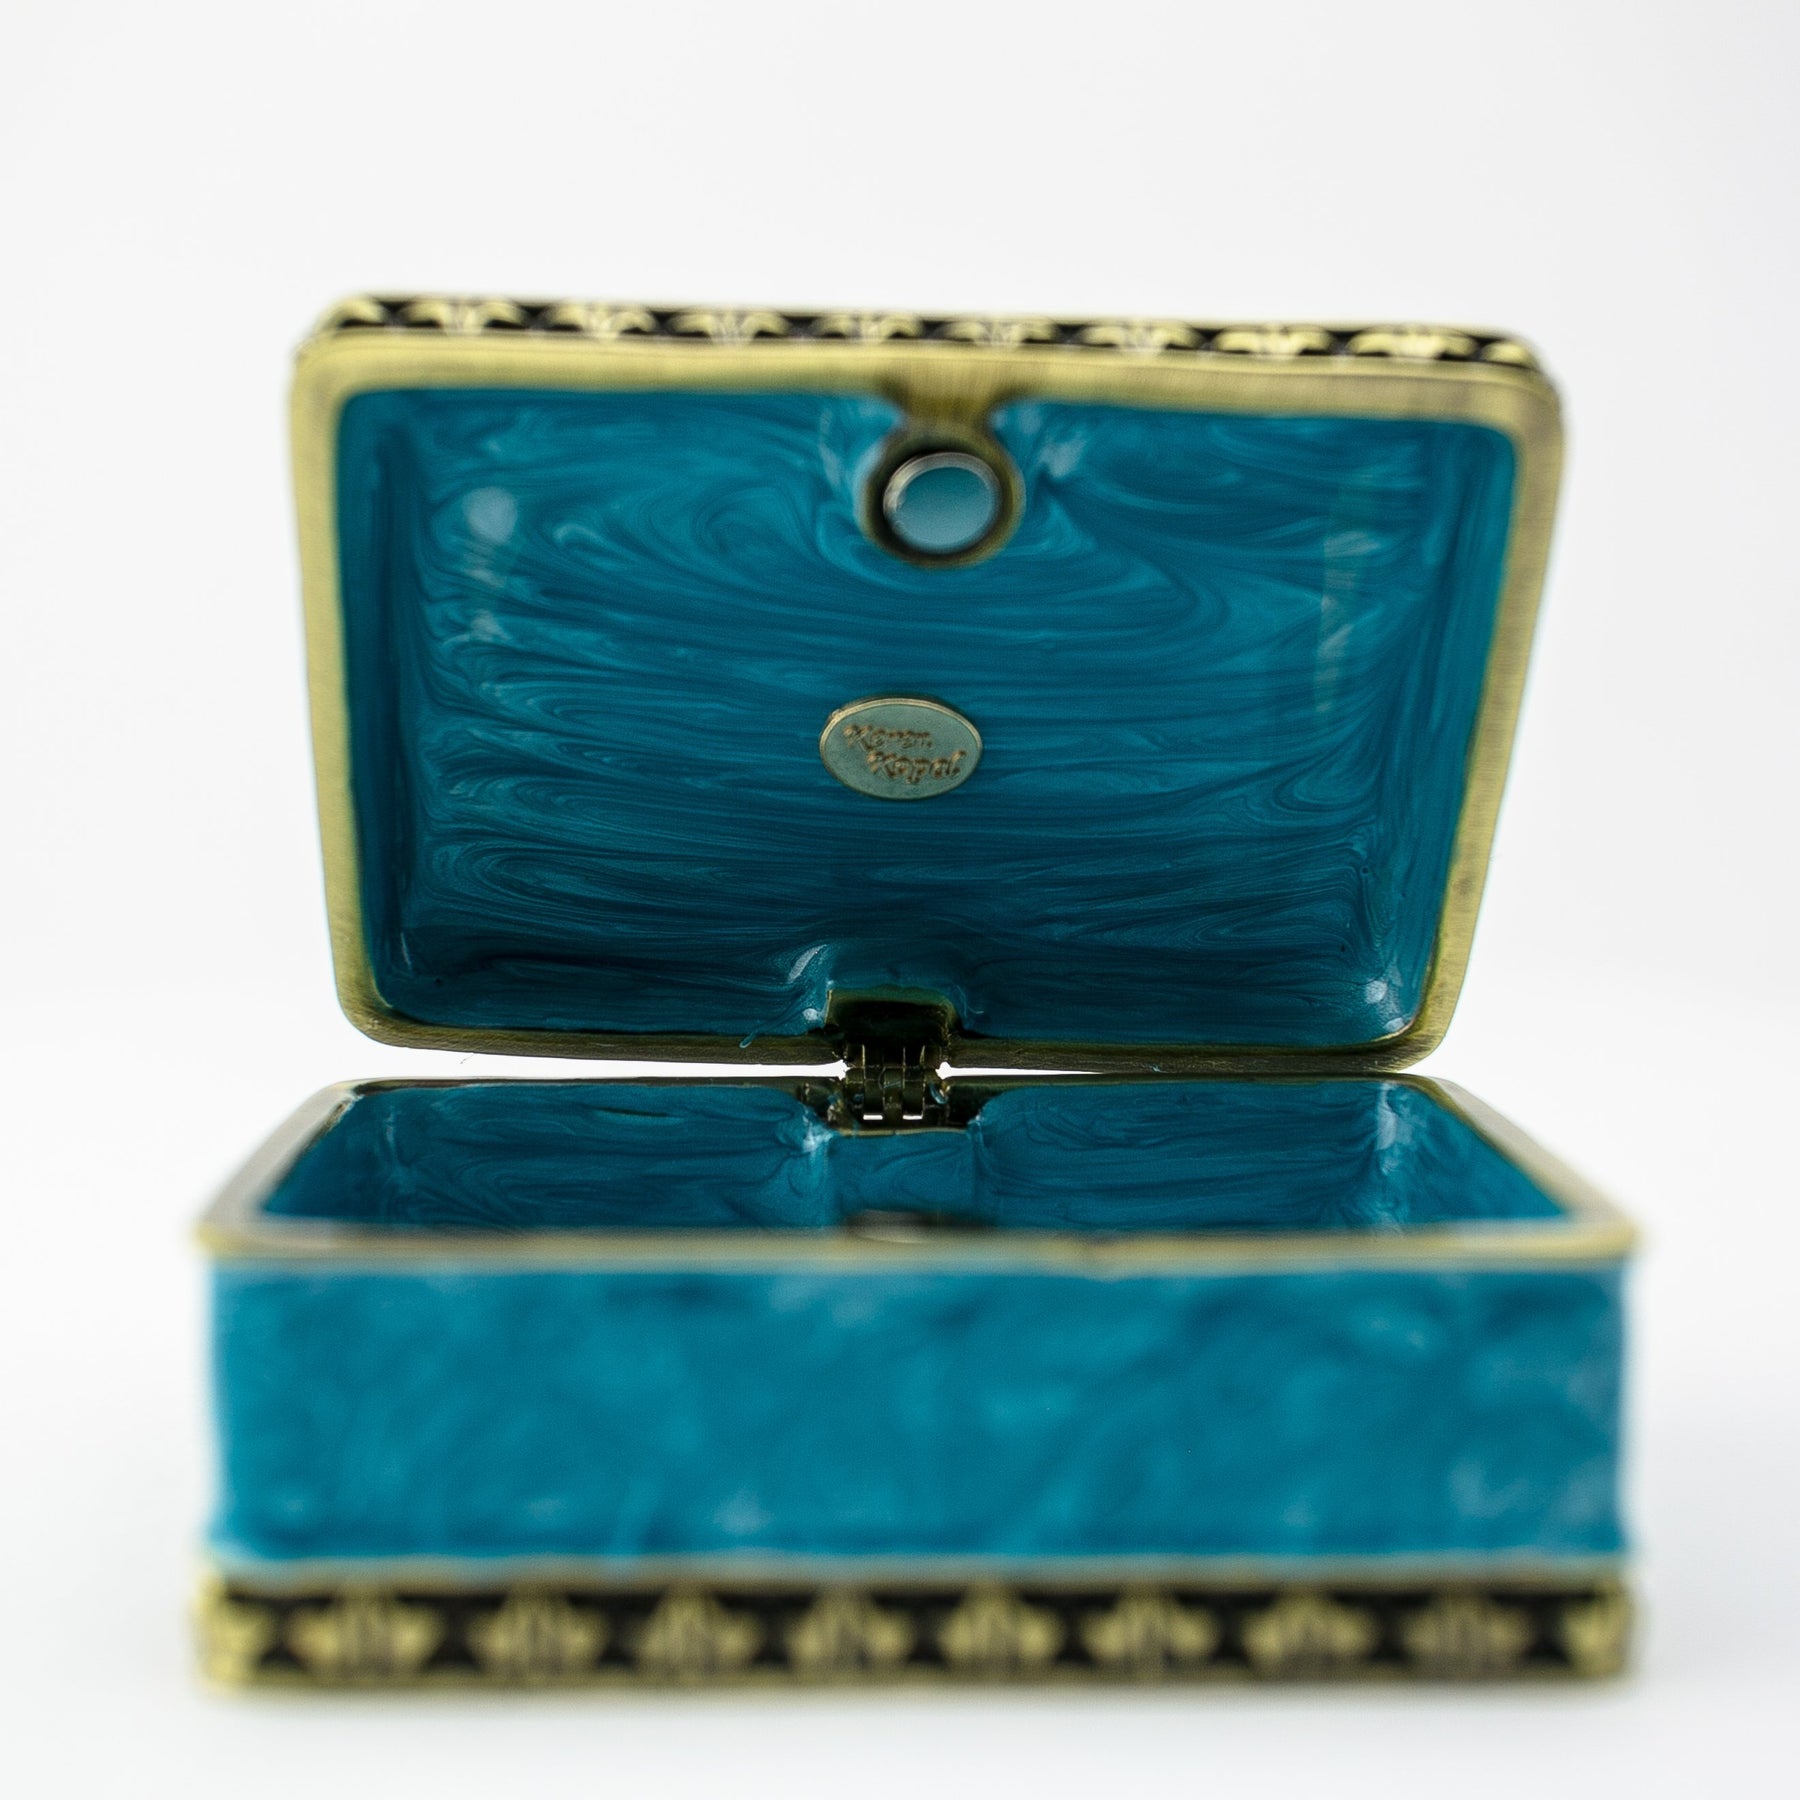 Turquoise Decorated Trinket Box with Horses trinket box Keren Kopal